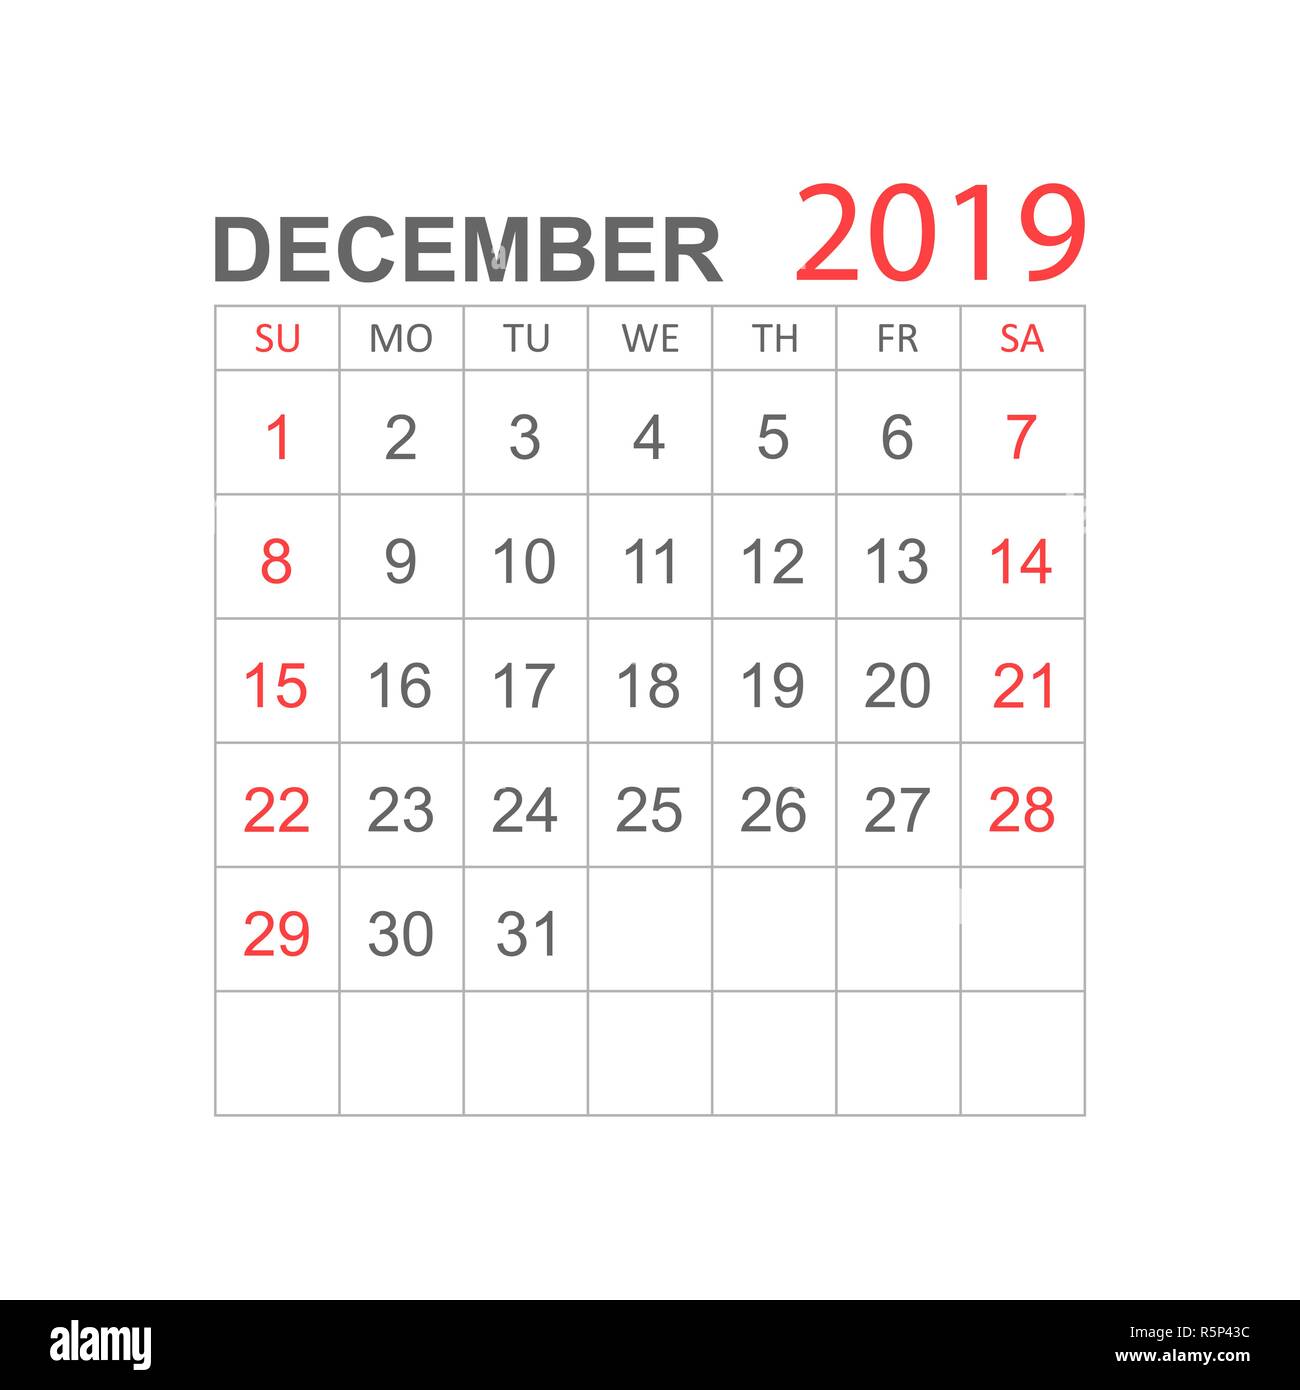 Calendar december 2019 year in simple style. Calendar planner design template. Agenda december monthly reminder. Business vector illustration. Stock Vector